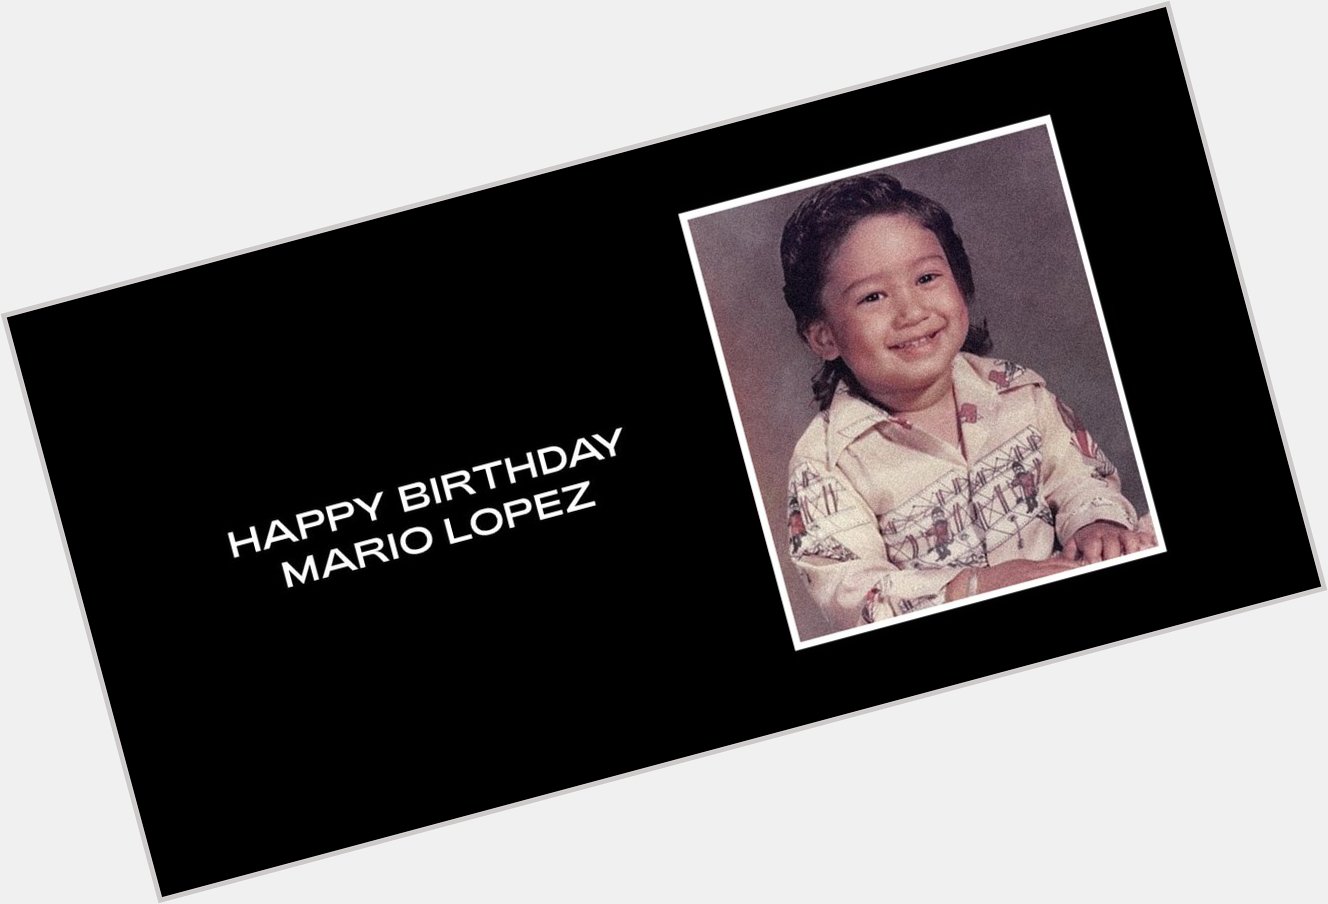  Happy Birthday Mario Lopez & Mya  